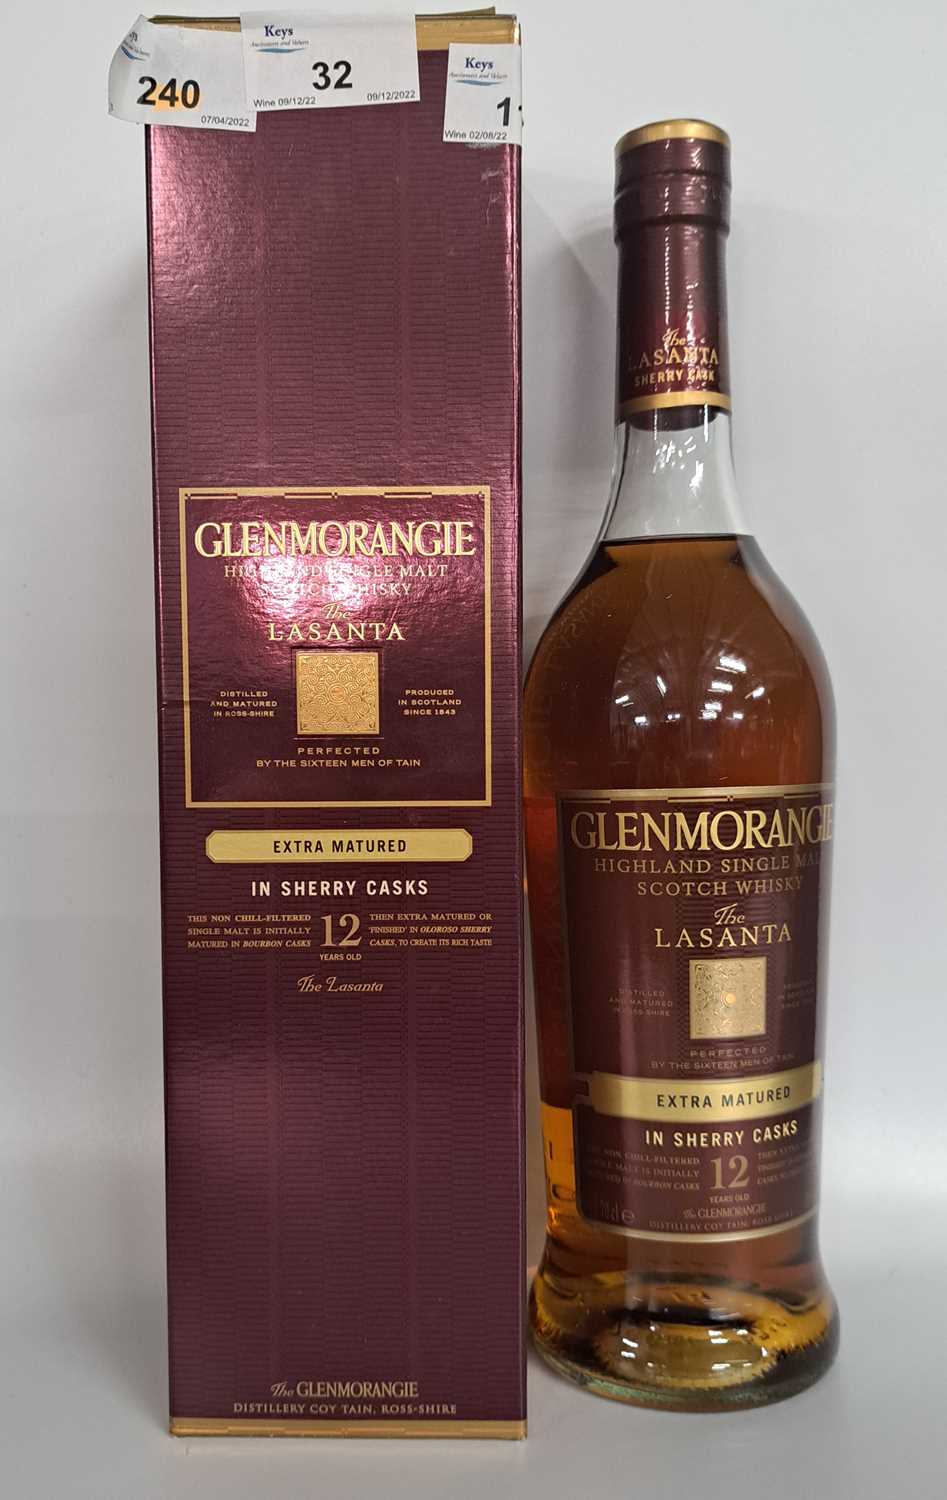 Glenmorangie Highland Single Malt Scotch Whiskey, The Lasanta, 12 years